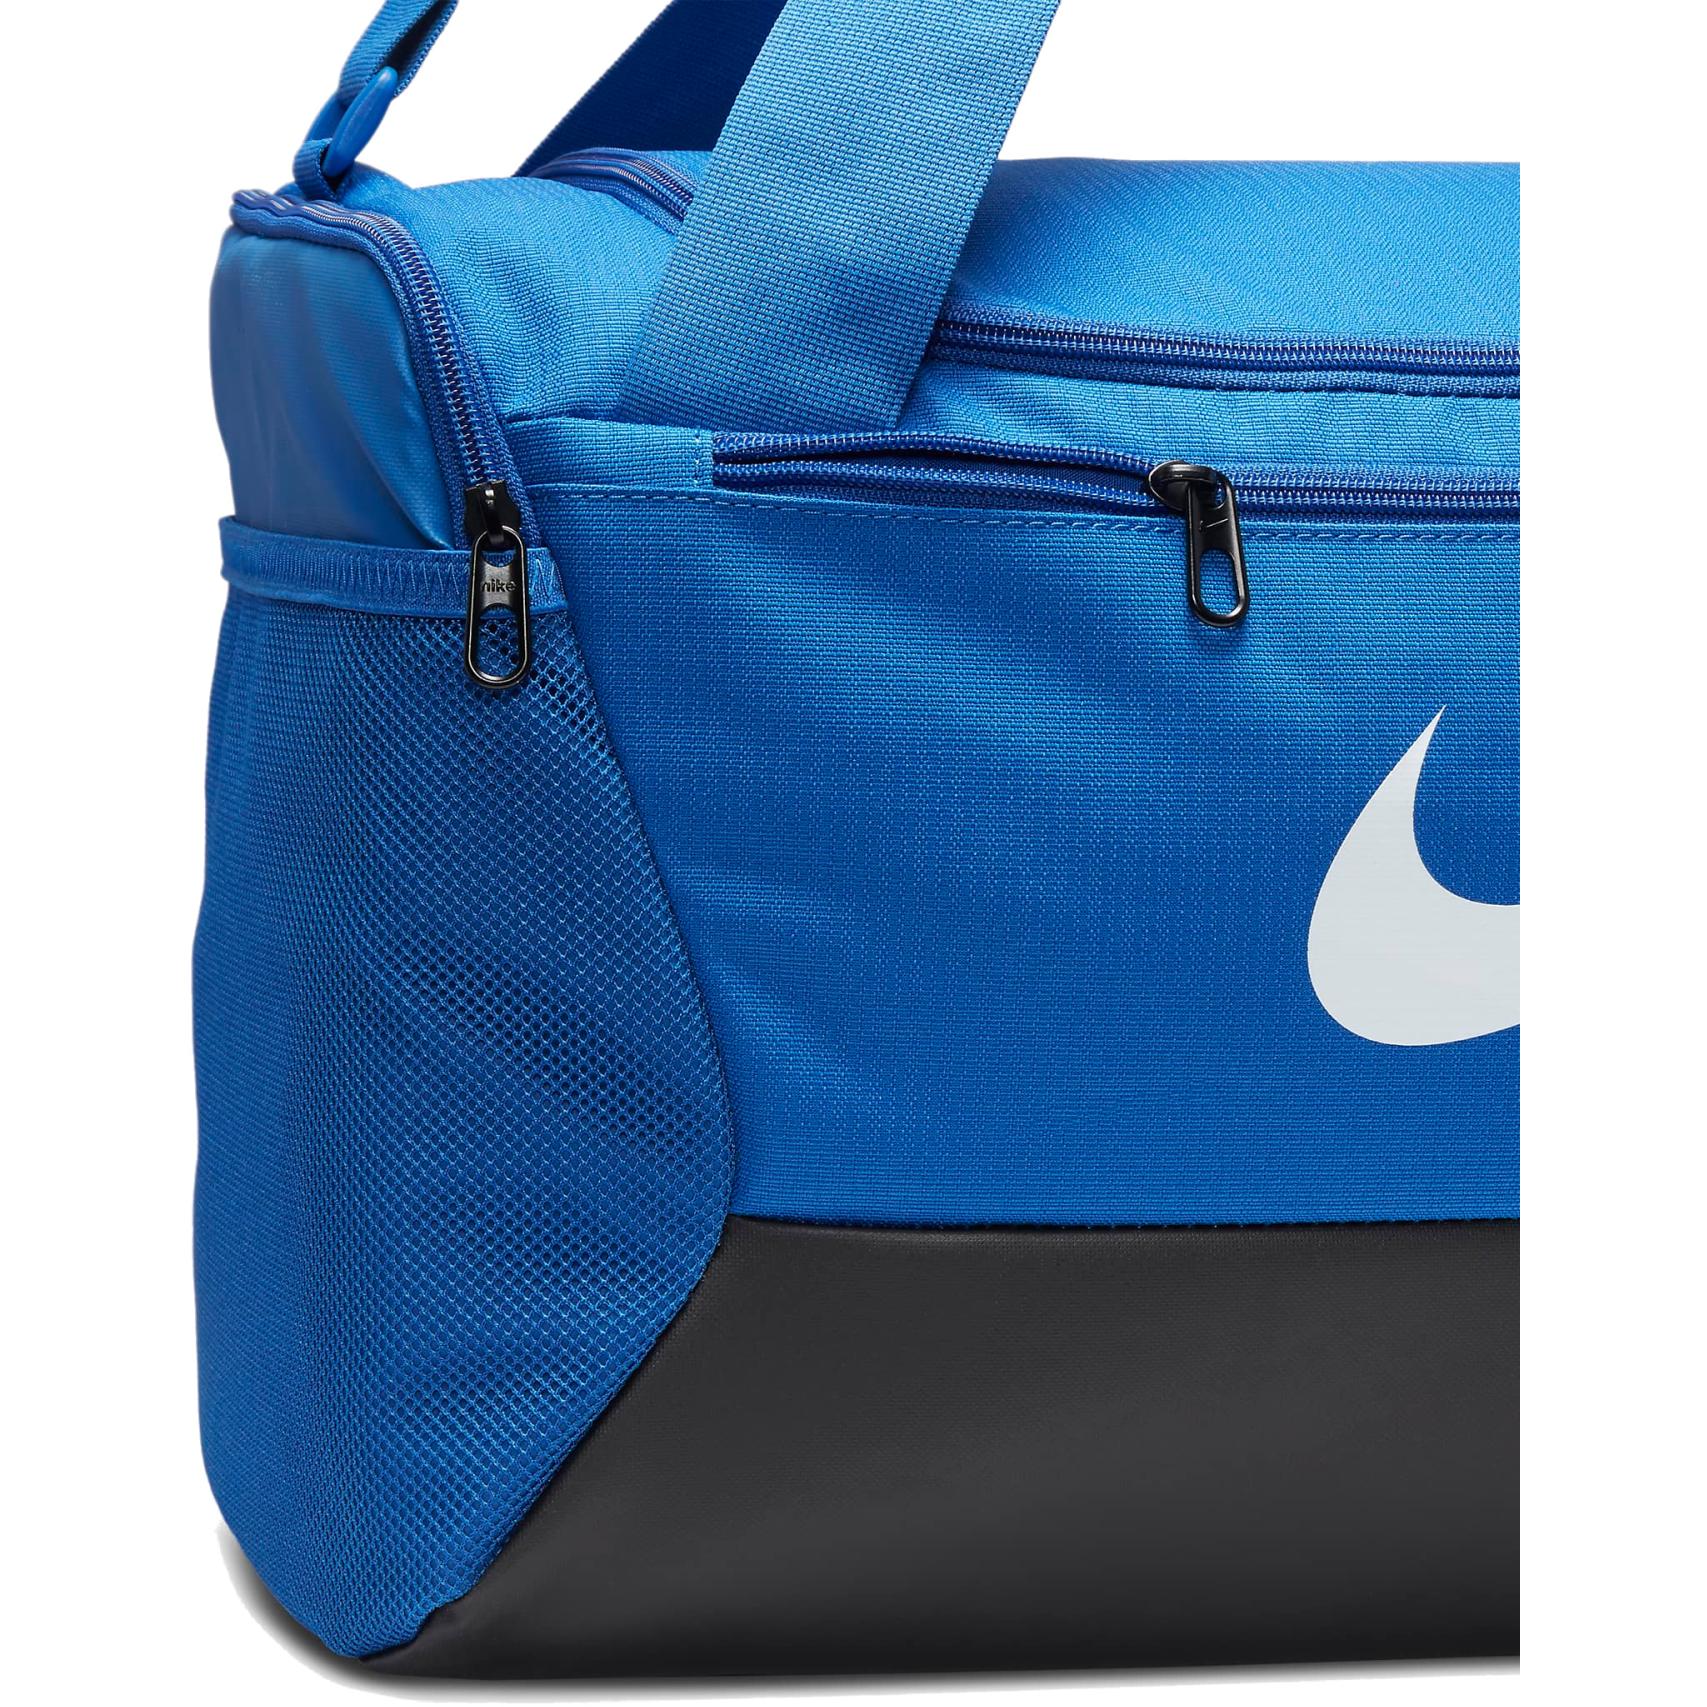 Nike Brasilia 9.5 Sportsbag XS